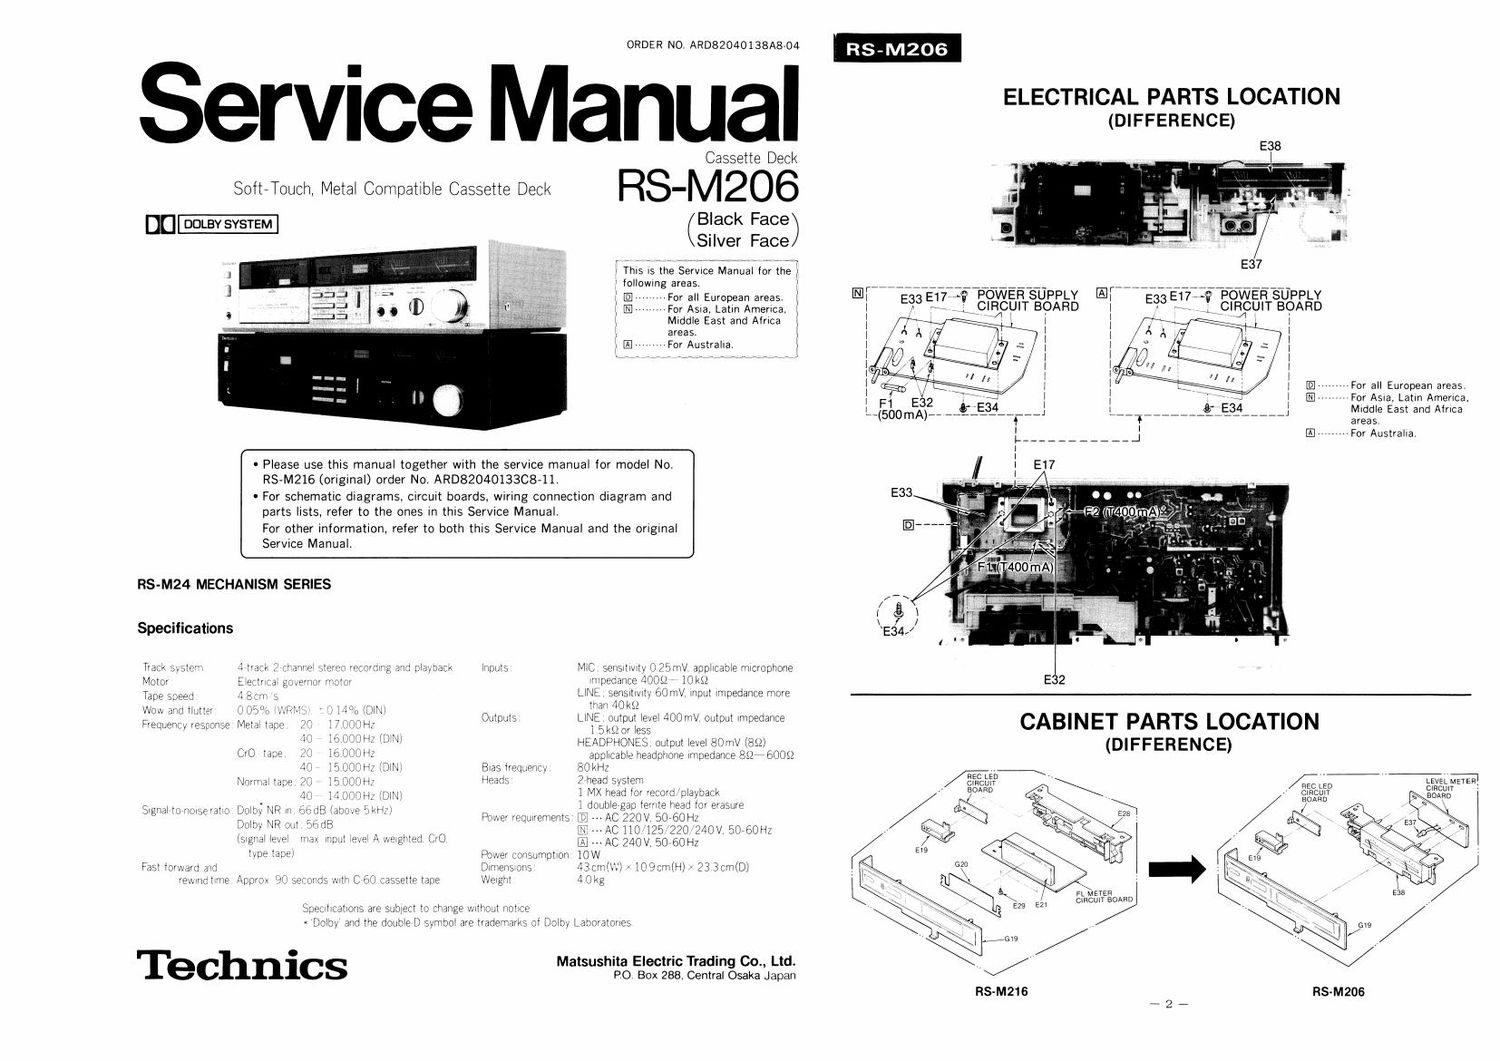 Technics RSM 206 Service Manual